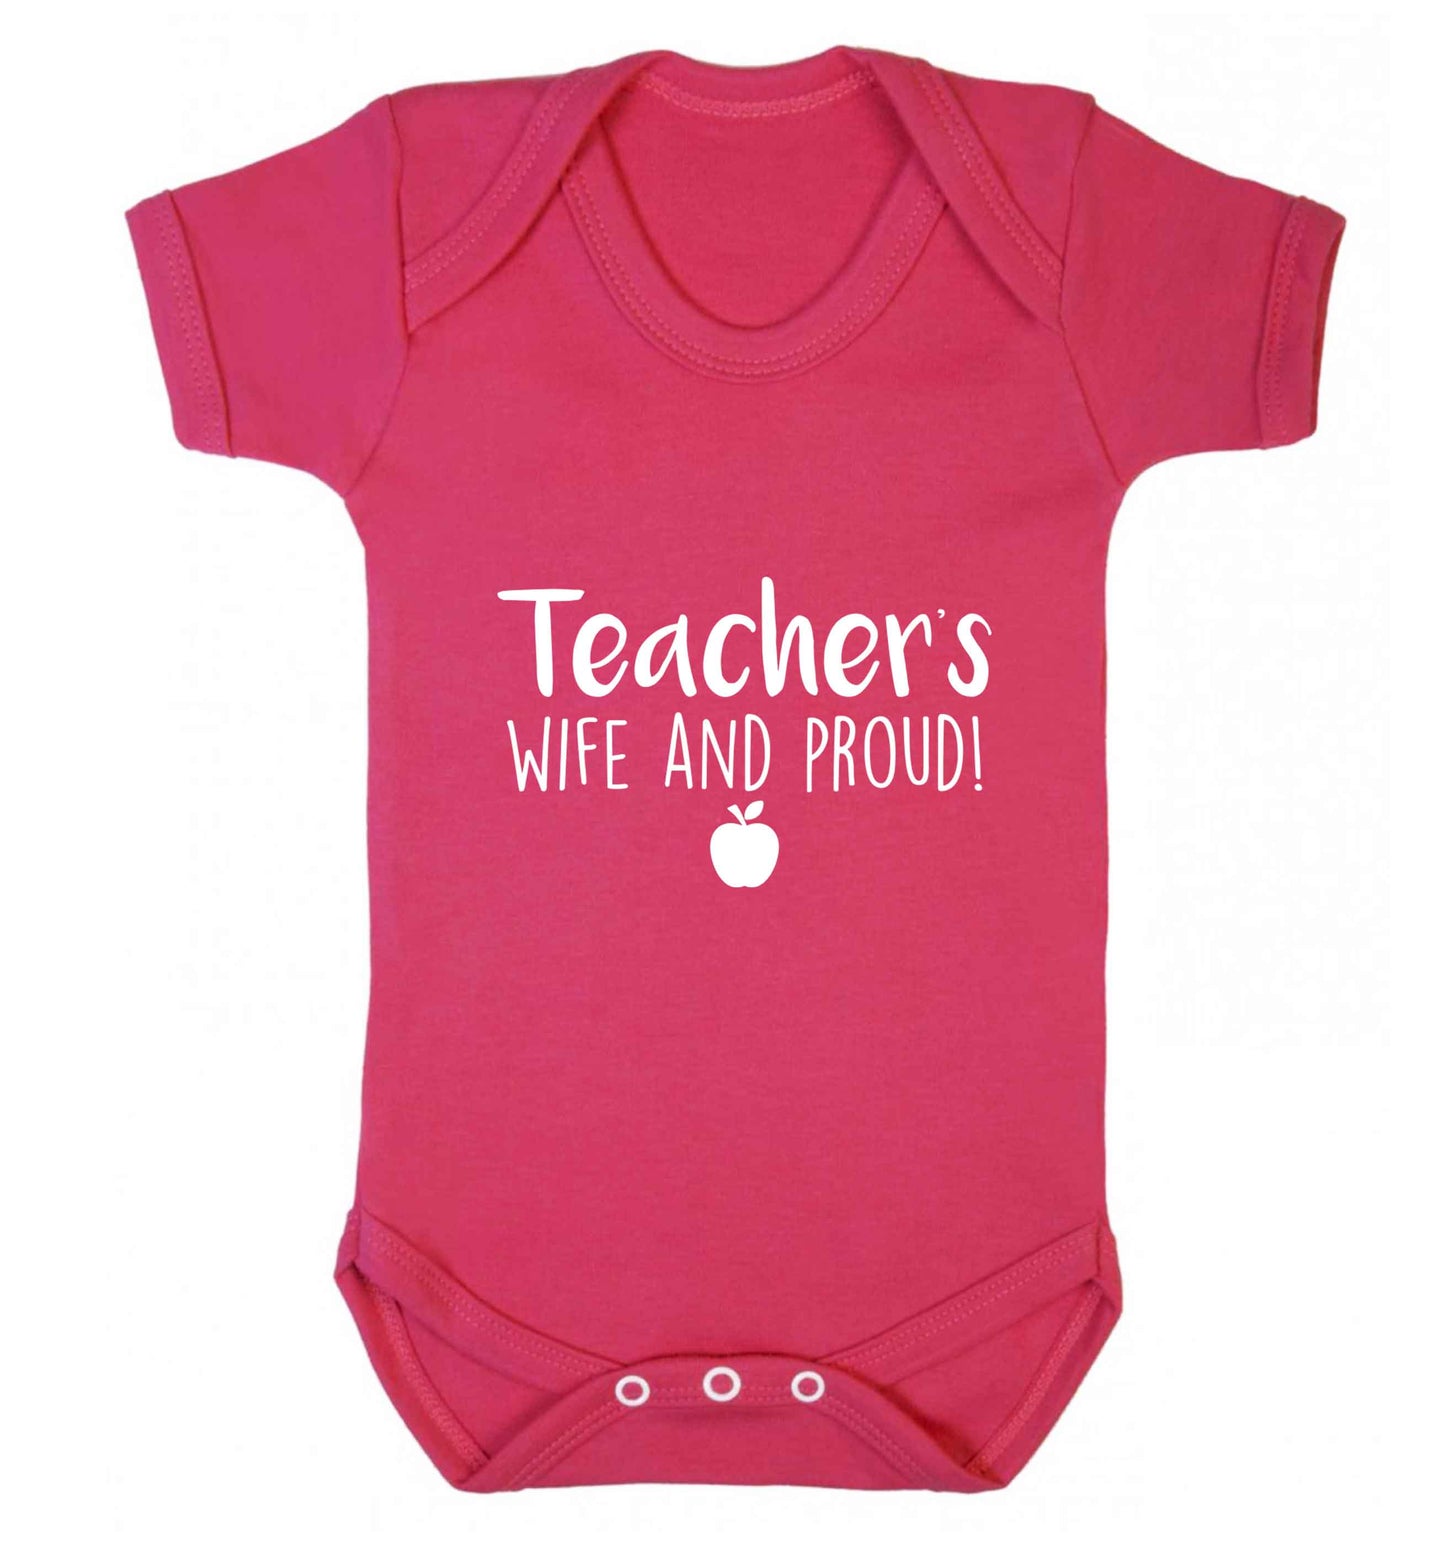 Teachers wife and proud baby vest dark pink 18-24 months